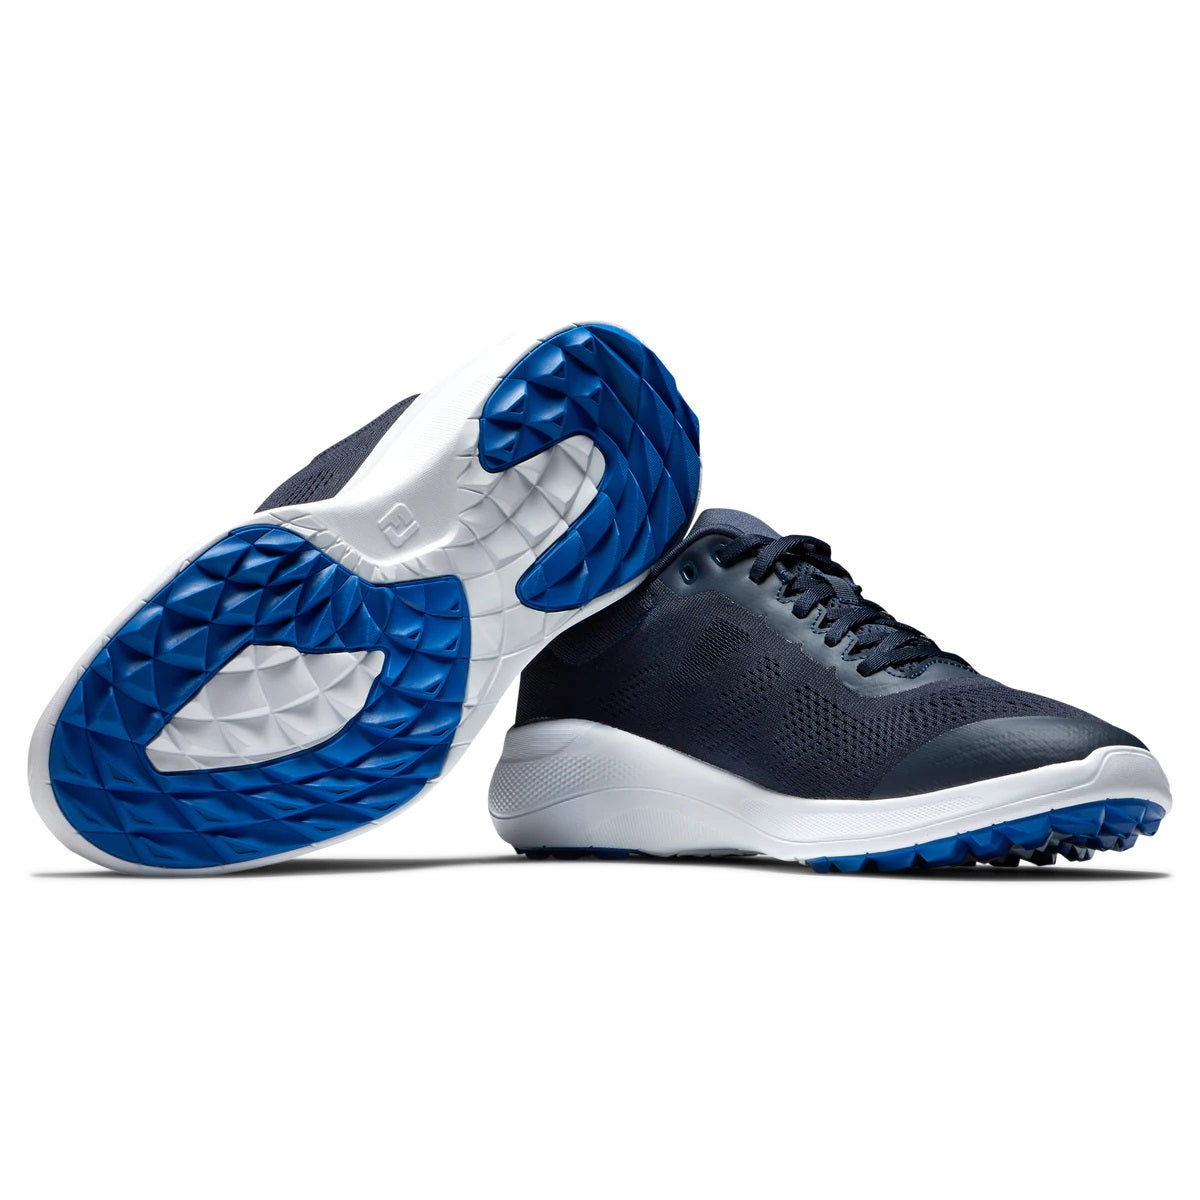 FootJoy Flex Golf Shoes Navy/White/Blue 56140 (Previous Season Style)